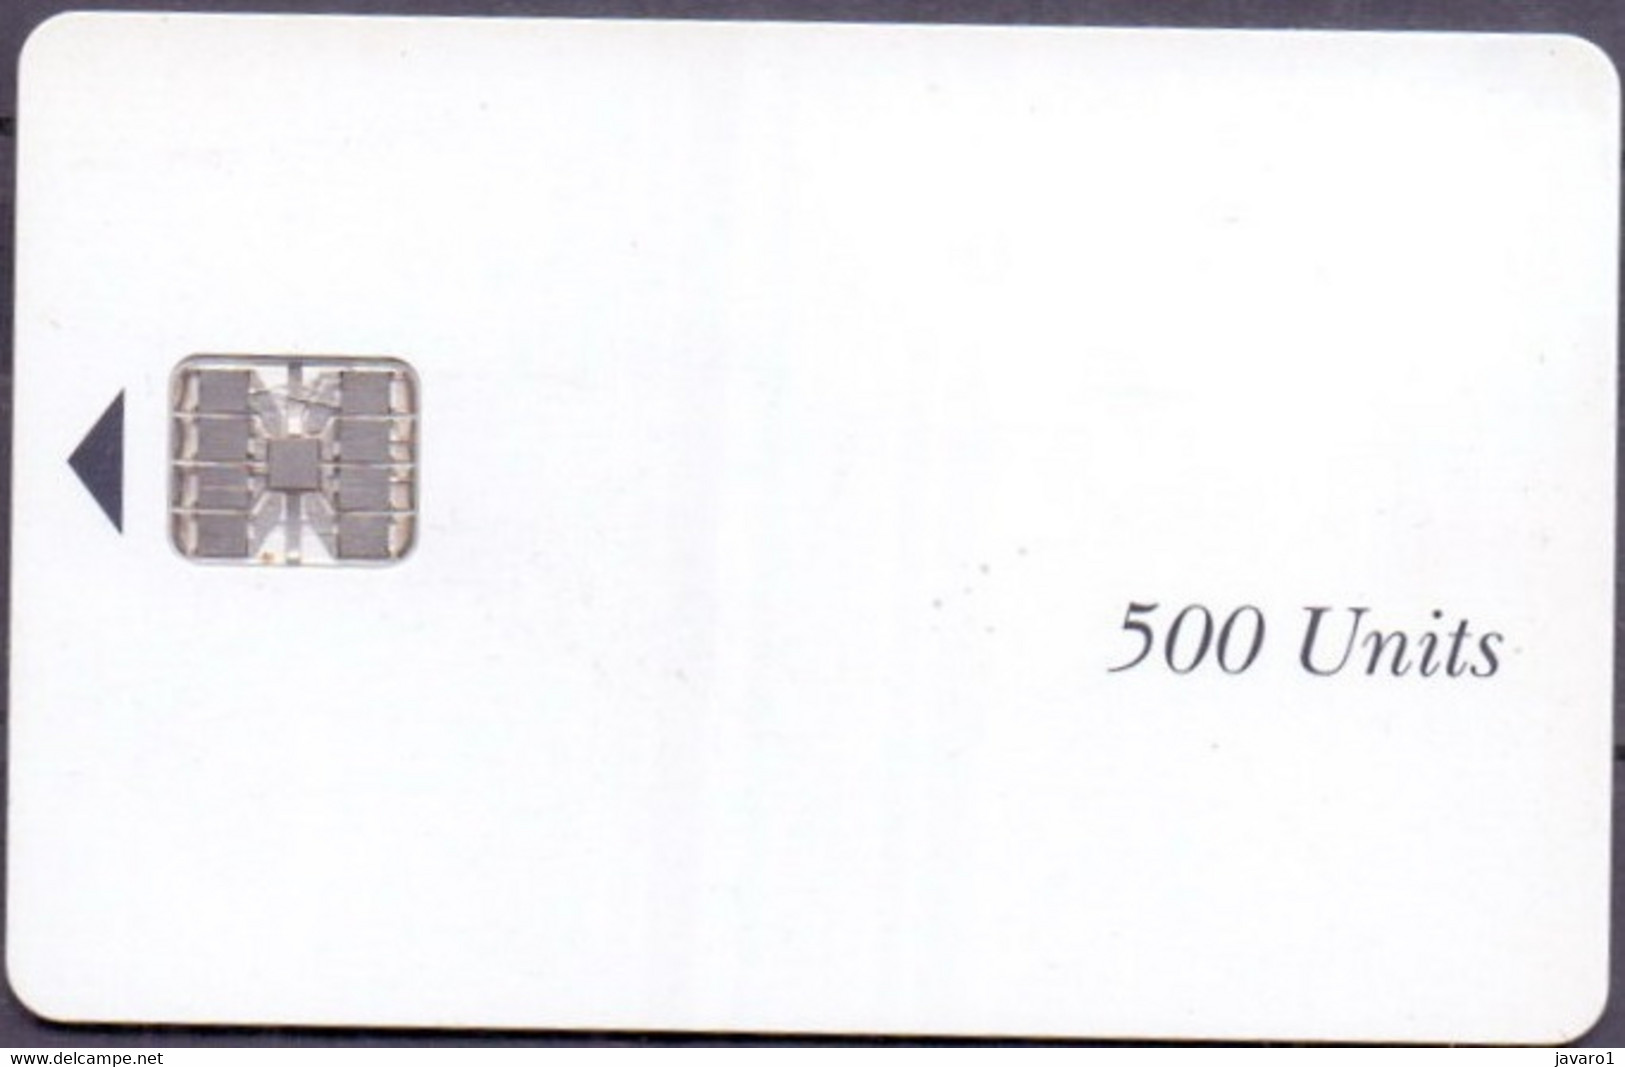 WHITE TRIAL : WAA04 White Card 500 Units USED - Pakistan